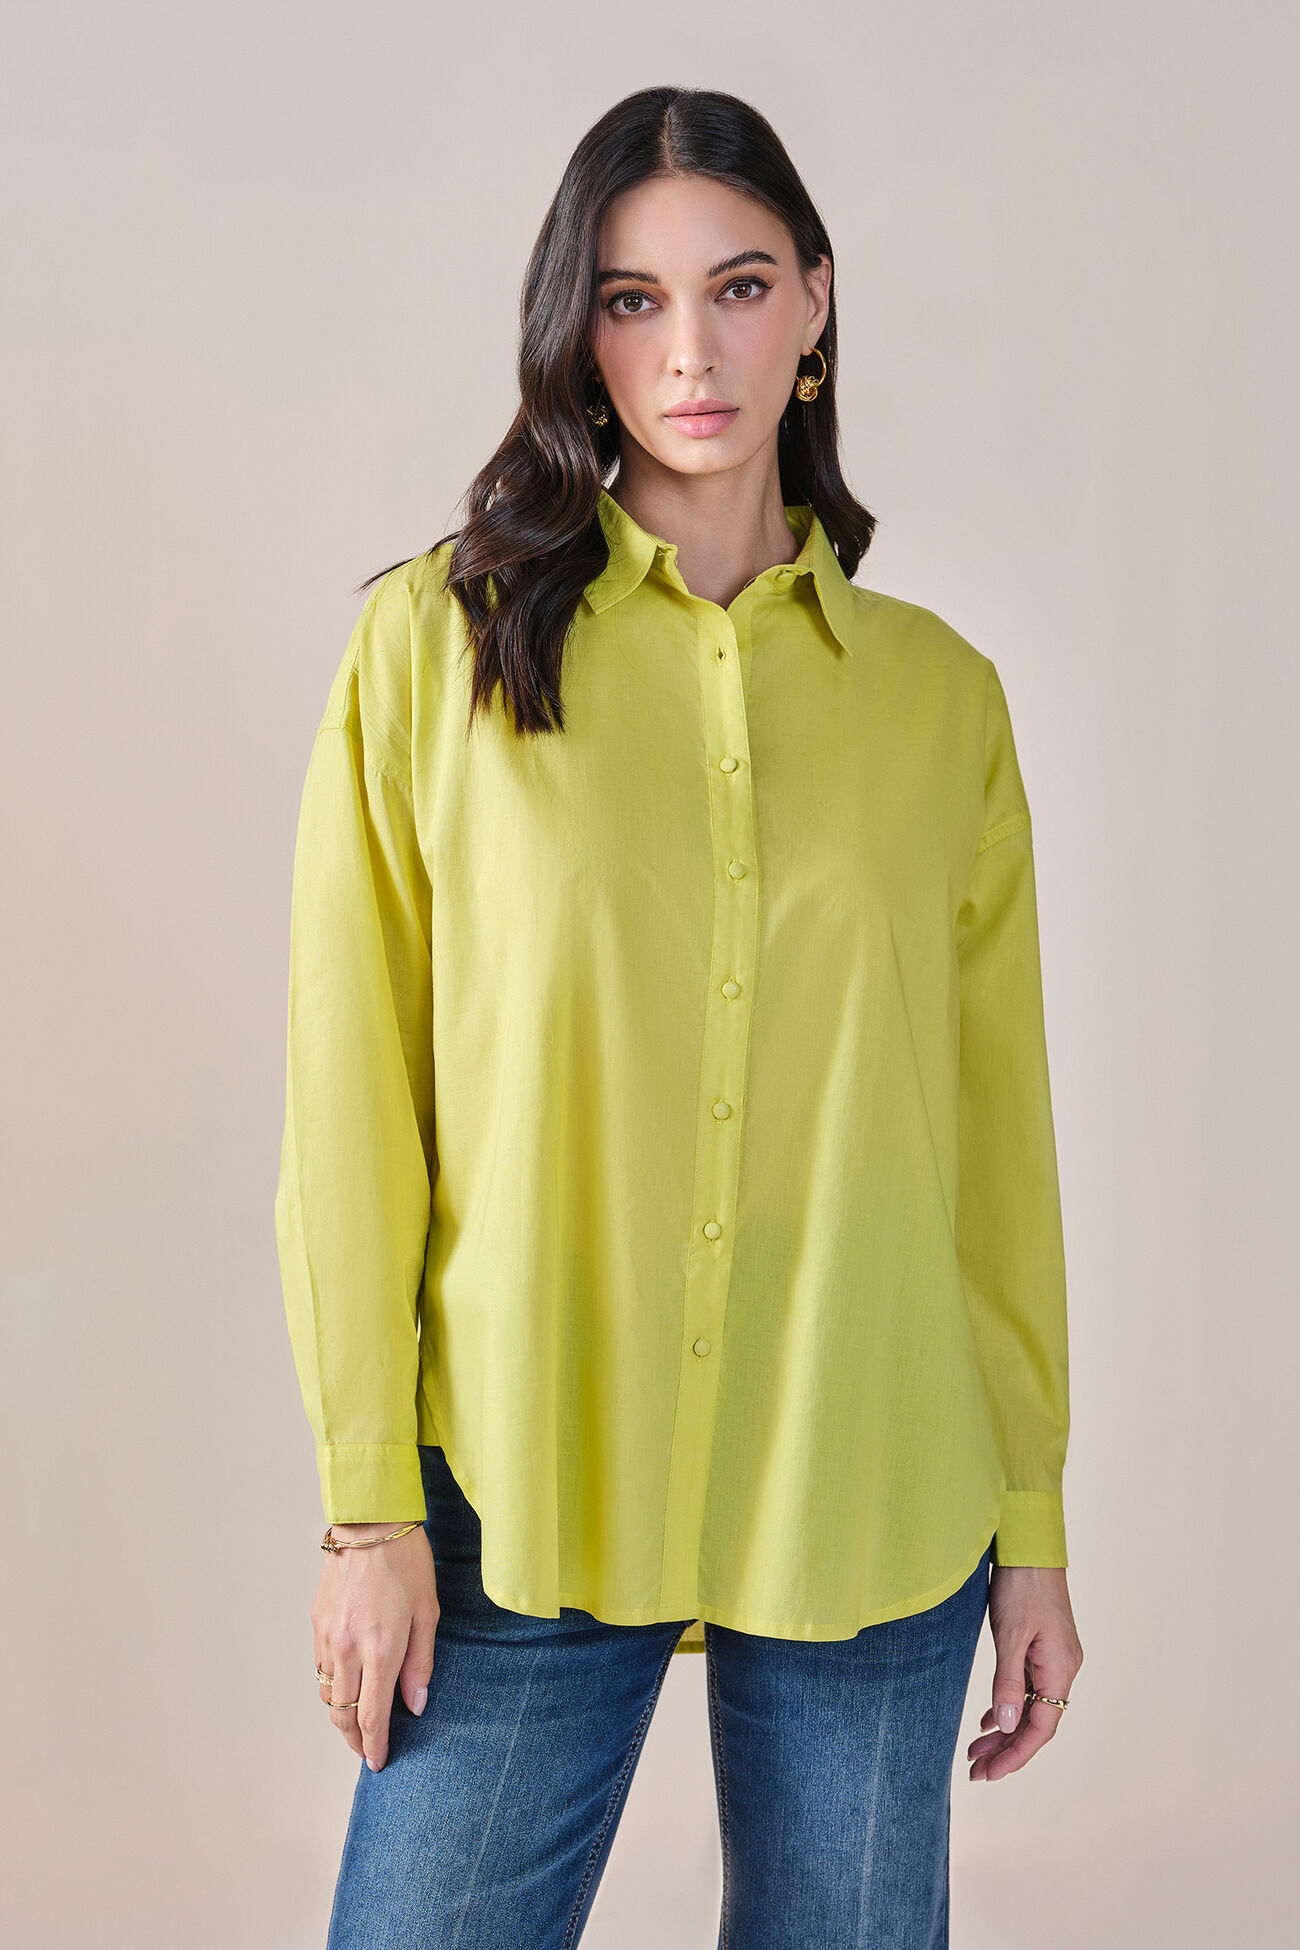 Sensational Solid Cotton Shirt, Lime Green, image 1